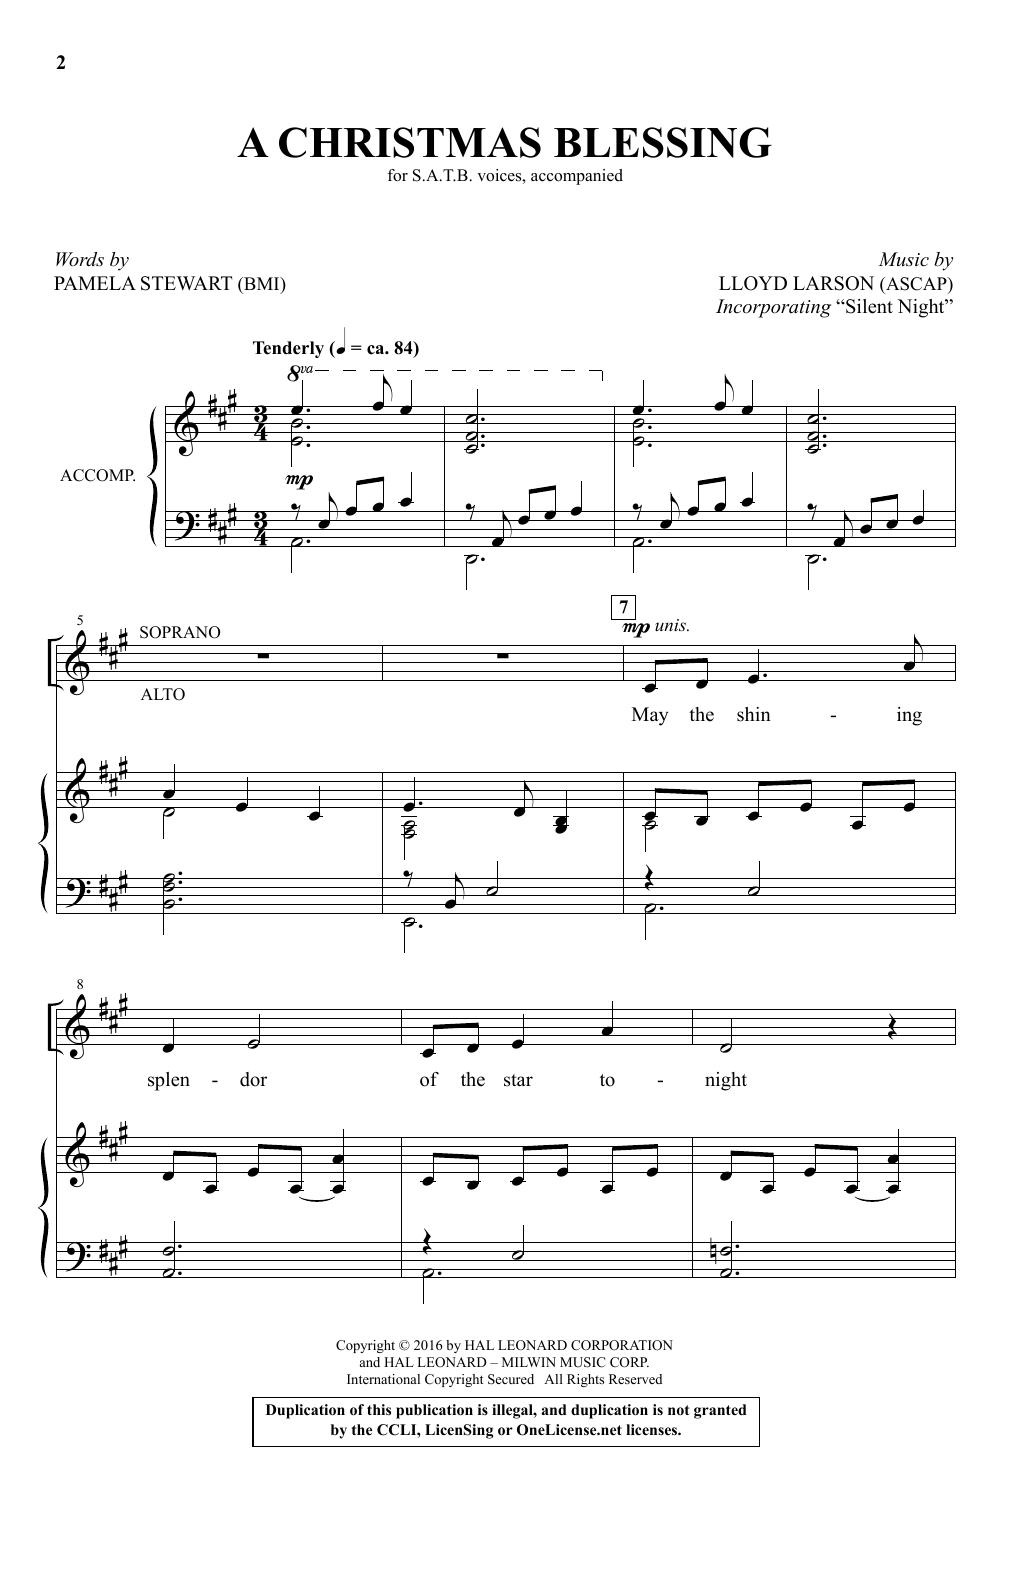 Lloyd Larson A Christmas Blessing sheet music notes and chords arranged for SATB Choir